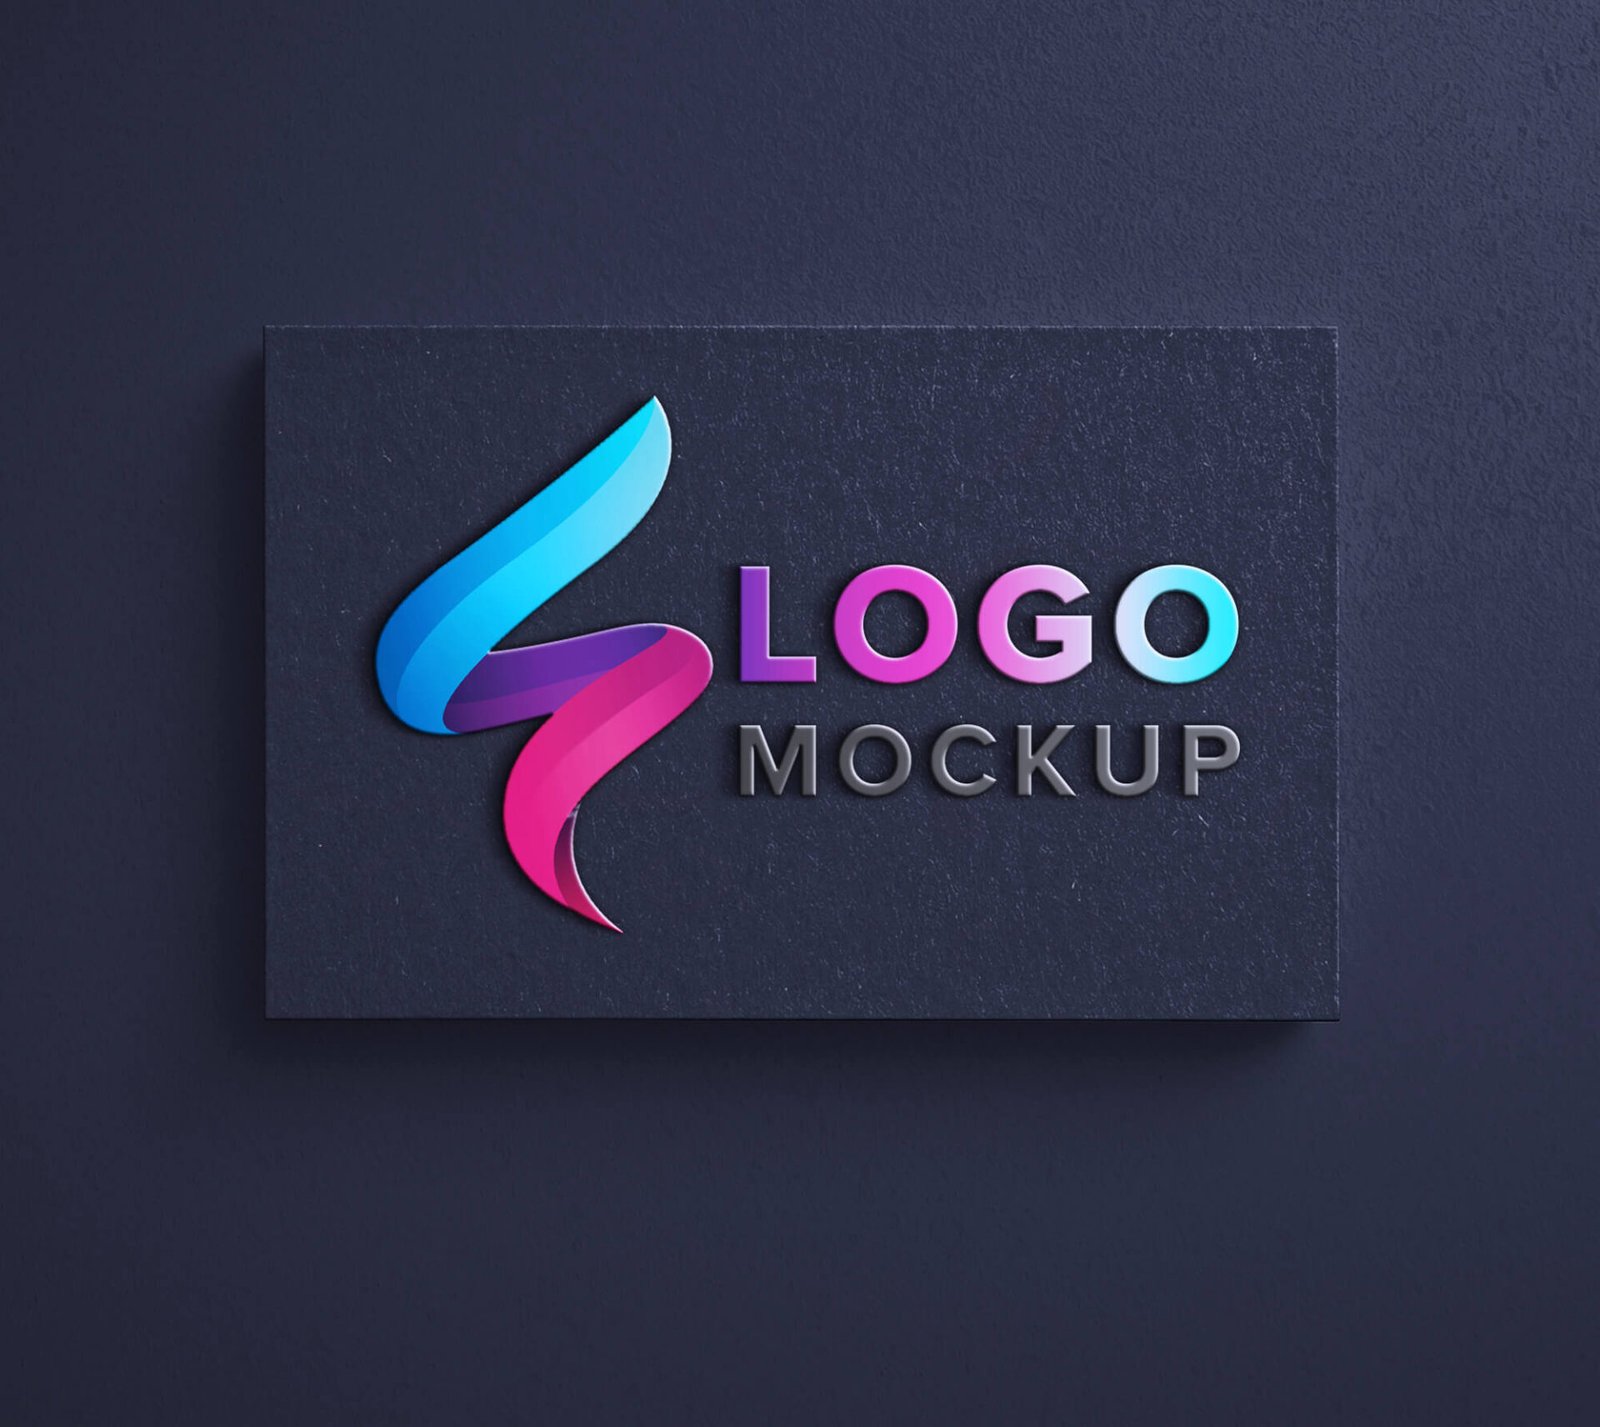 logo presentation mockup psd free download